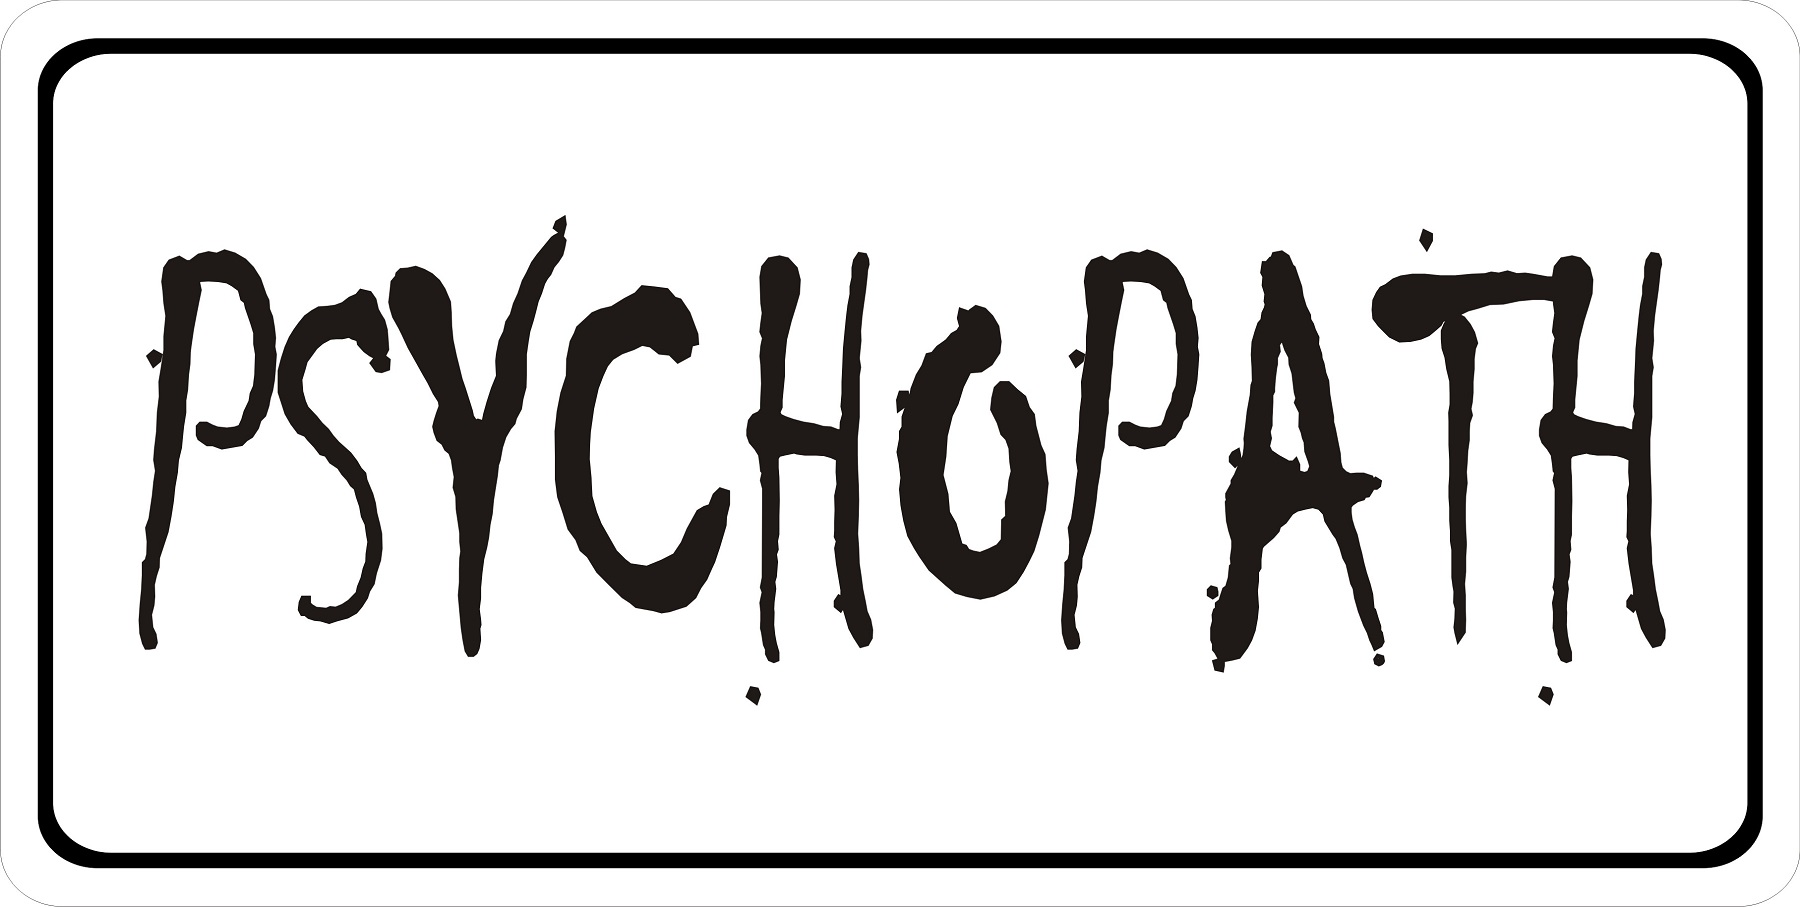 Psychopath Photo LICENSE PLATE